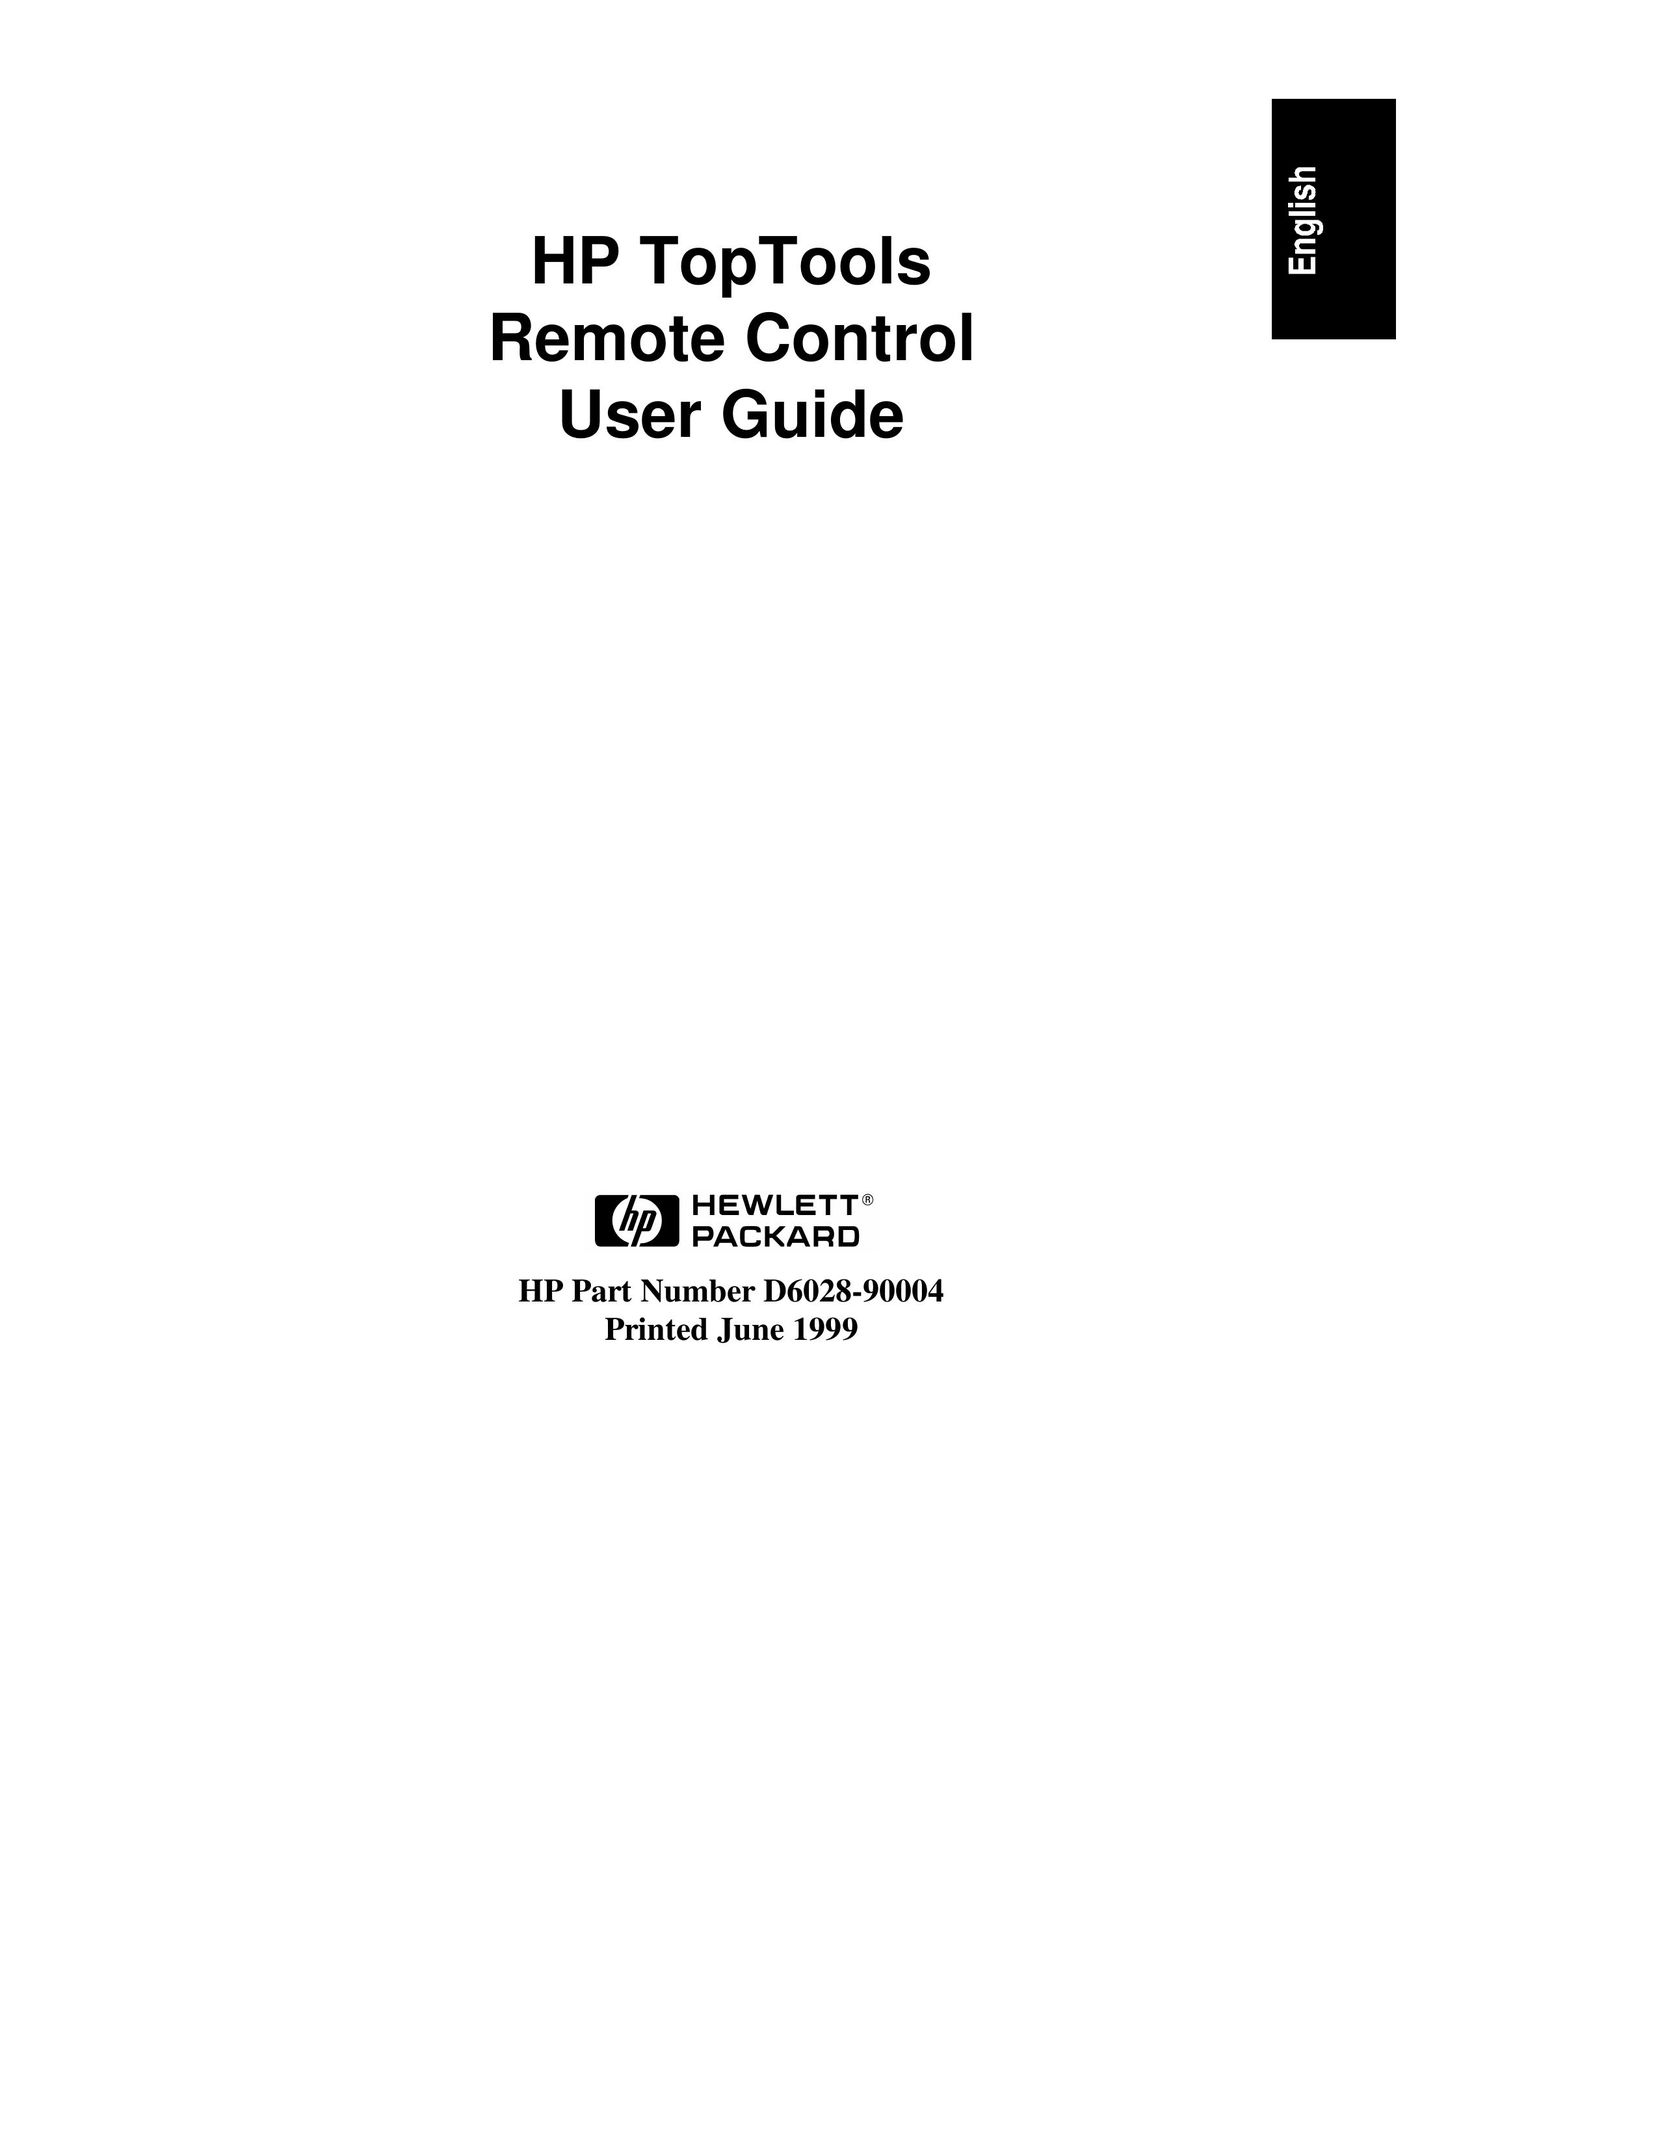 HP (Hewlett-Packard) D6028-90004 Universal Remote User Manual